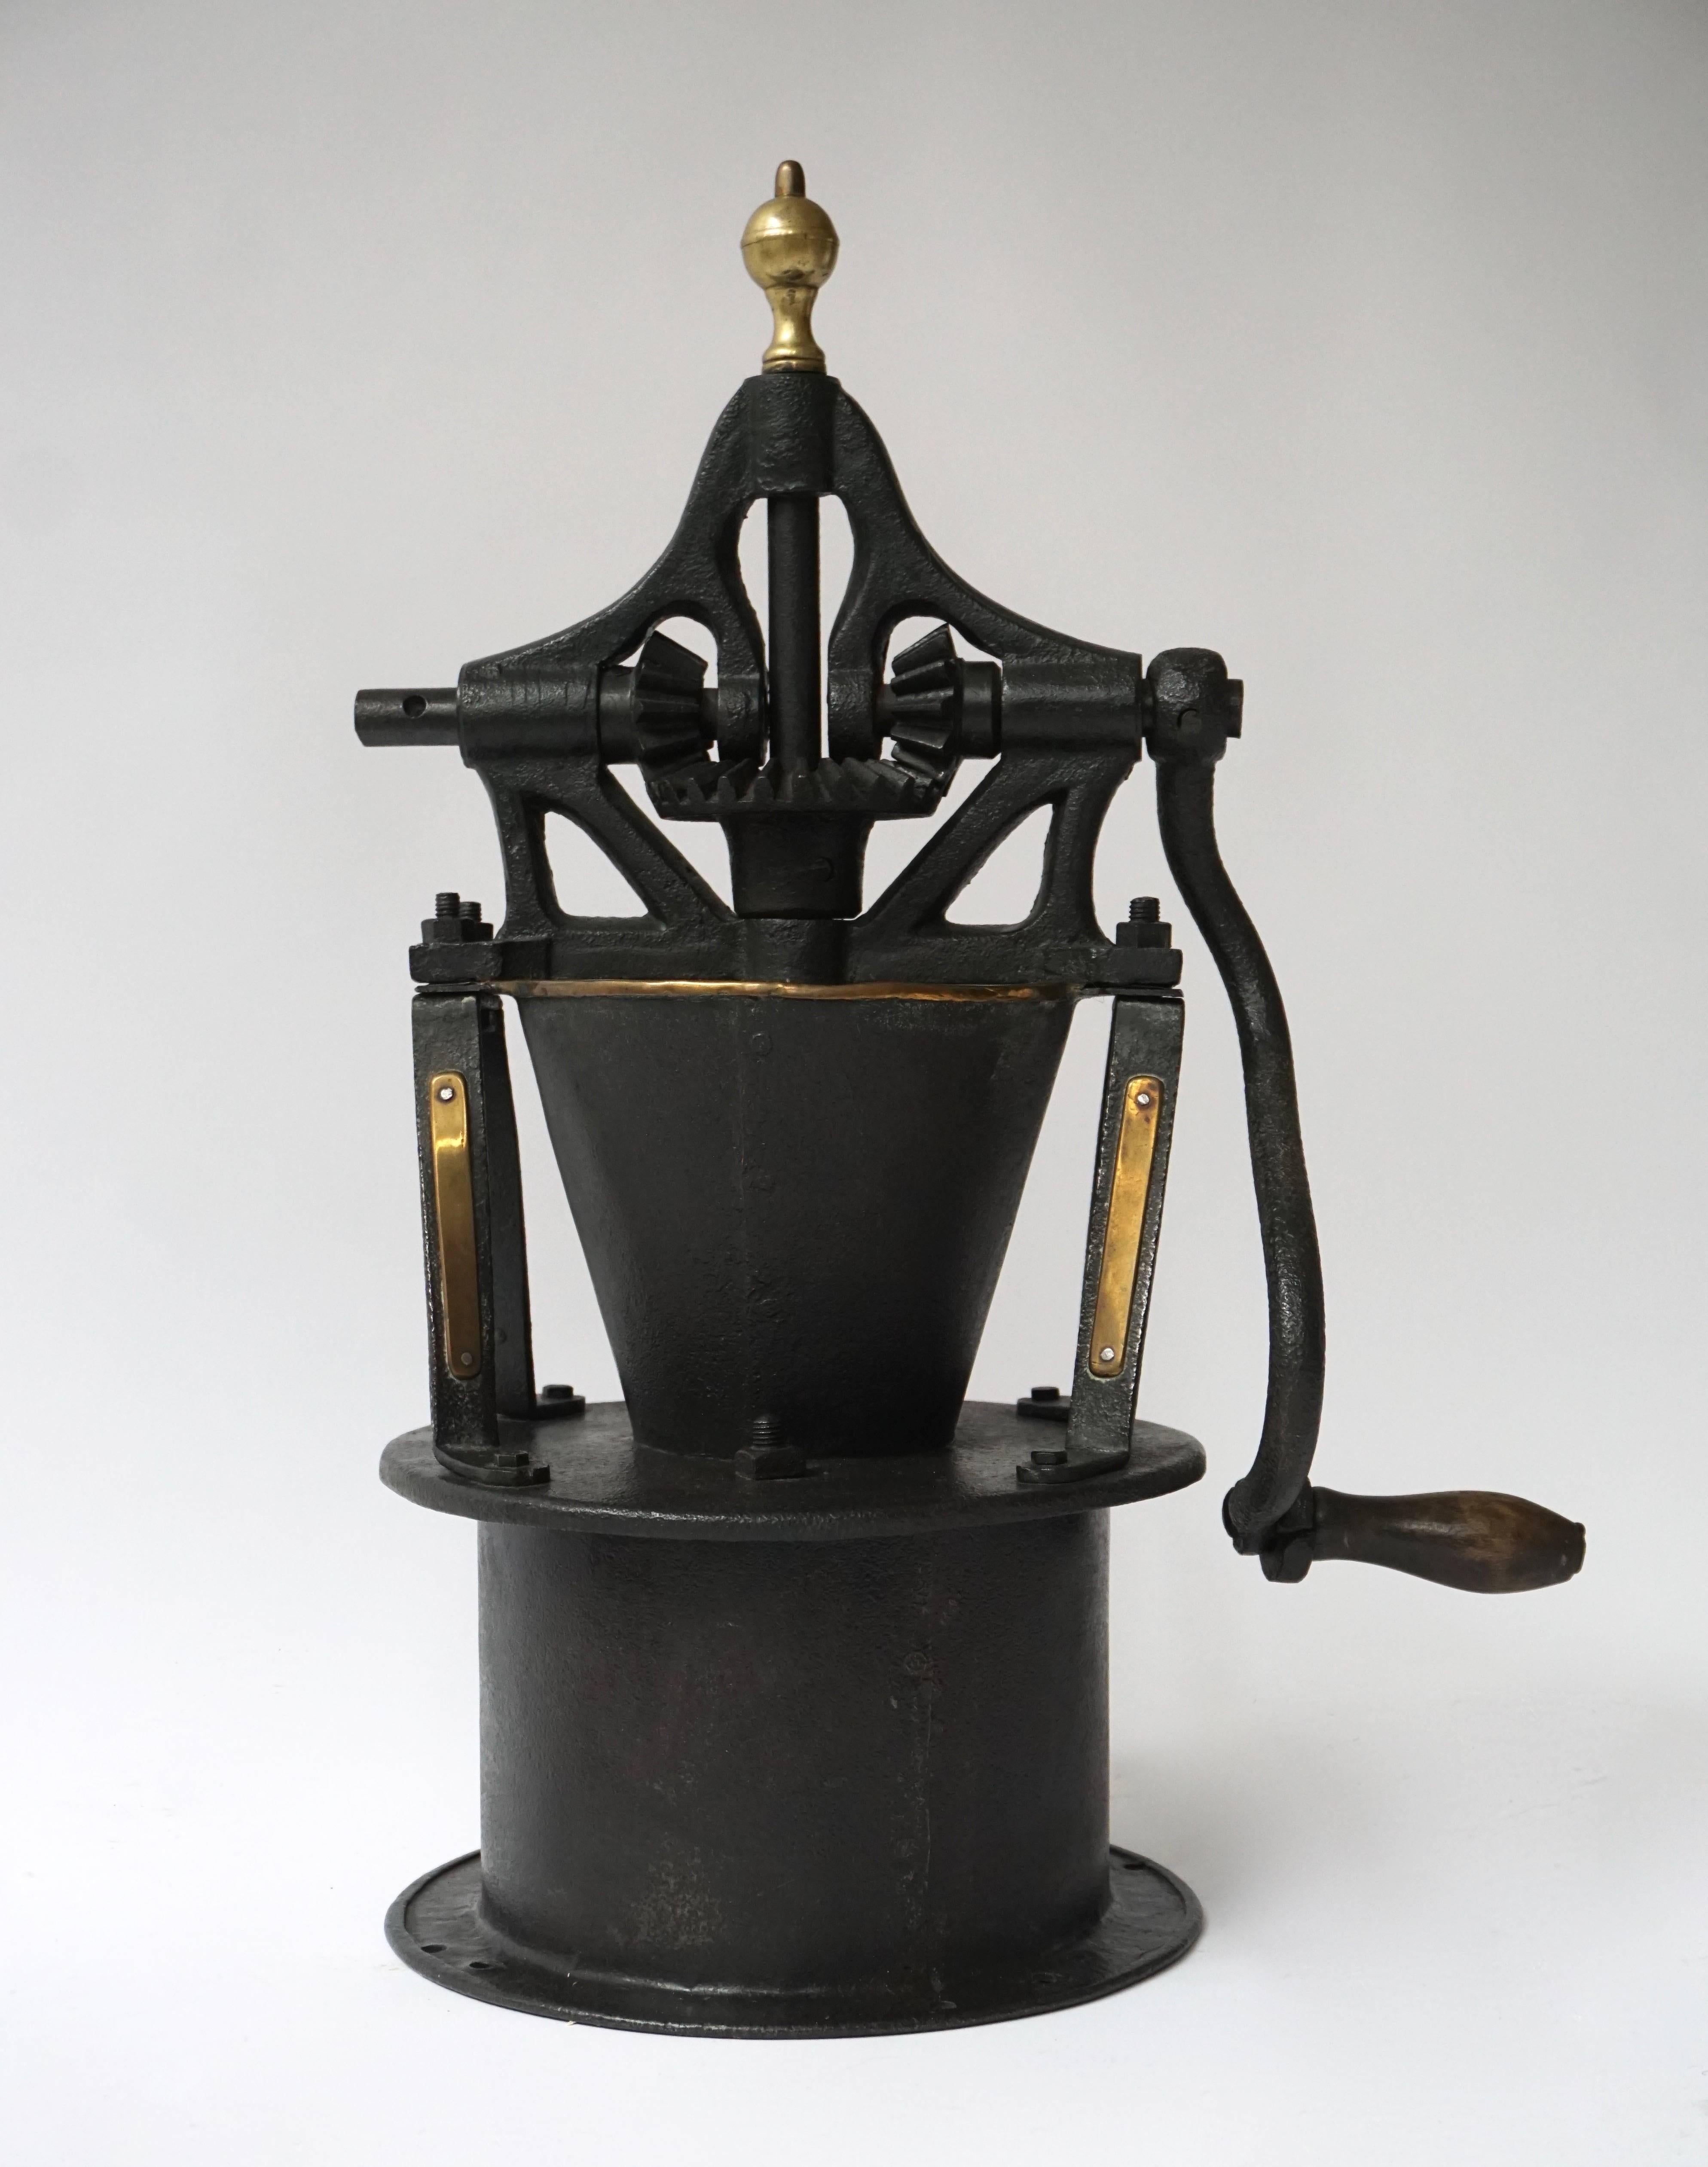 An early Industrial coffee grinder.
Measures: Height 60 cm,
width 40 cm,
depth 26 cm.